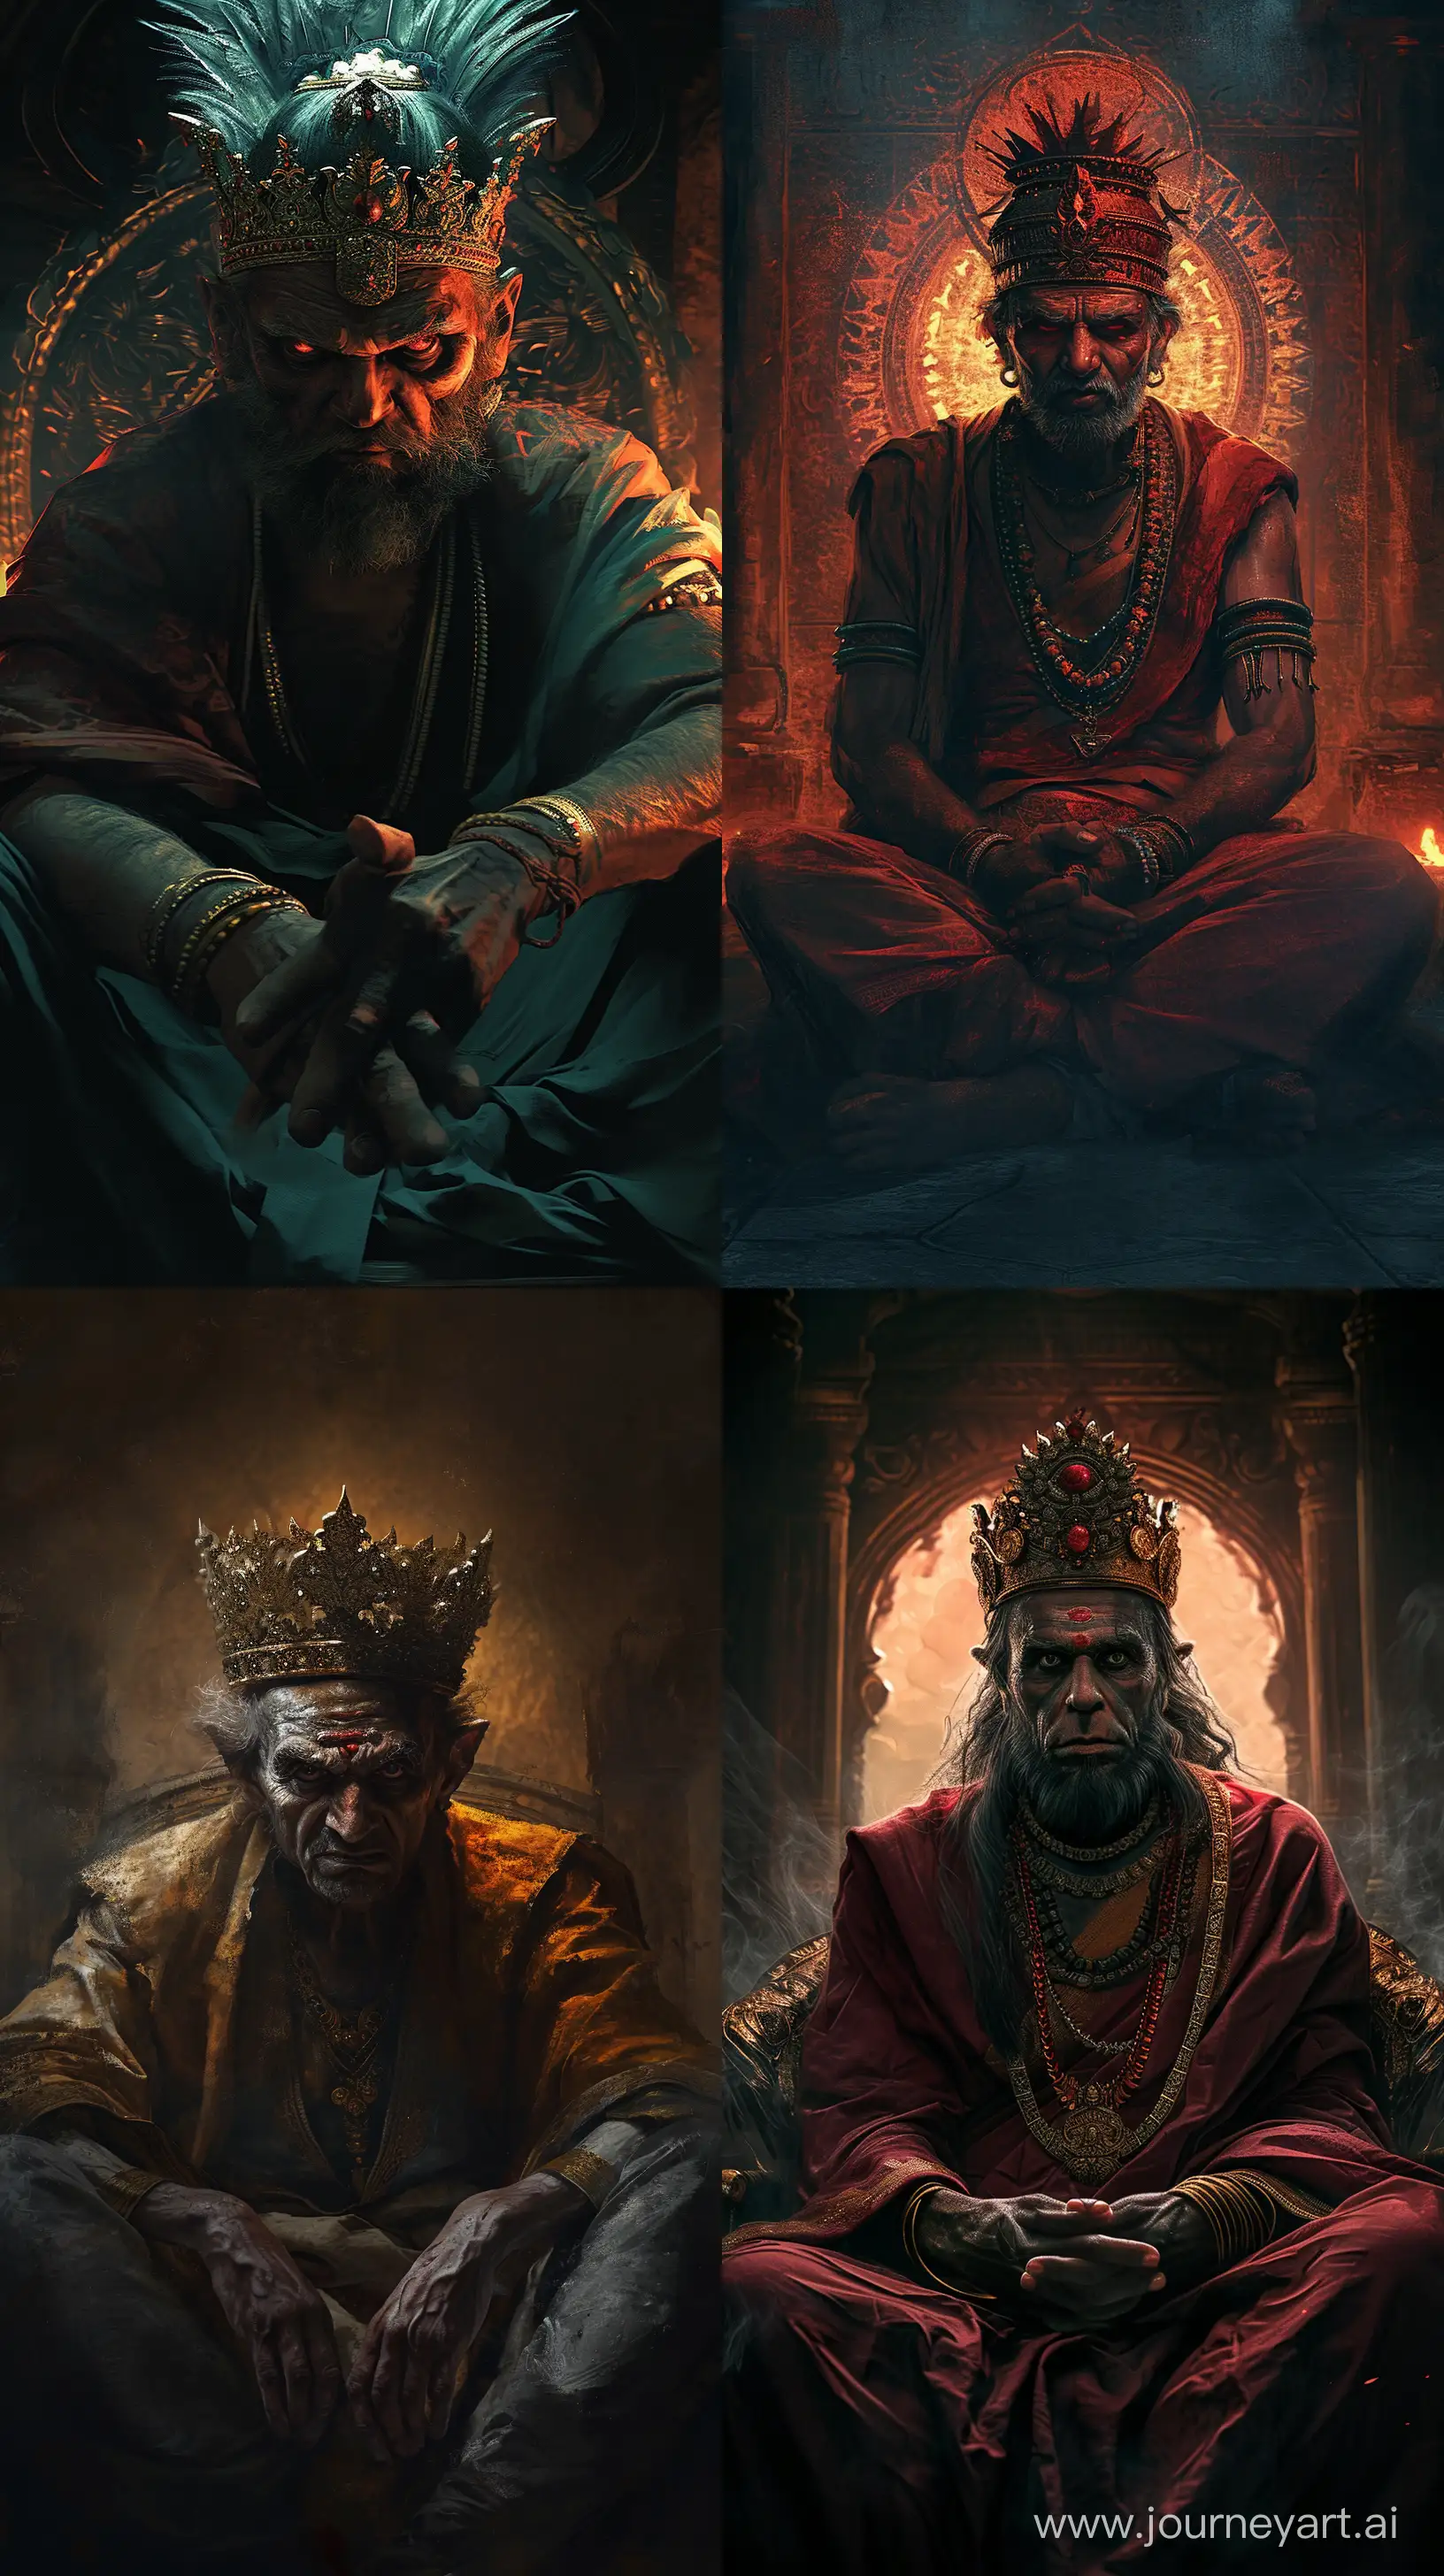 Ancient-Indian-King-with-Malevolent-Aura-HighResolution-Digital-Art